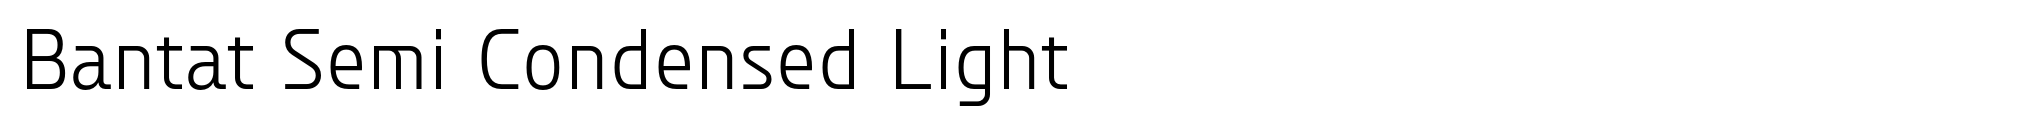 Bantat Semi Condensed Light image